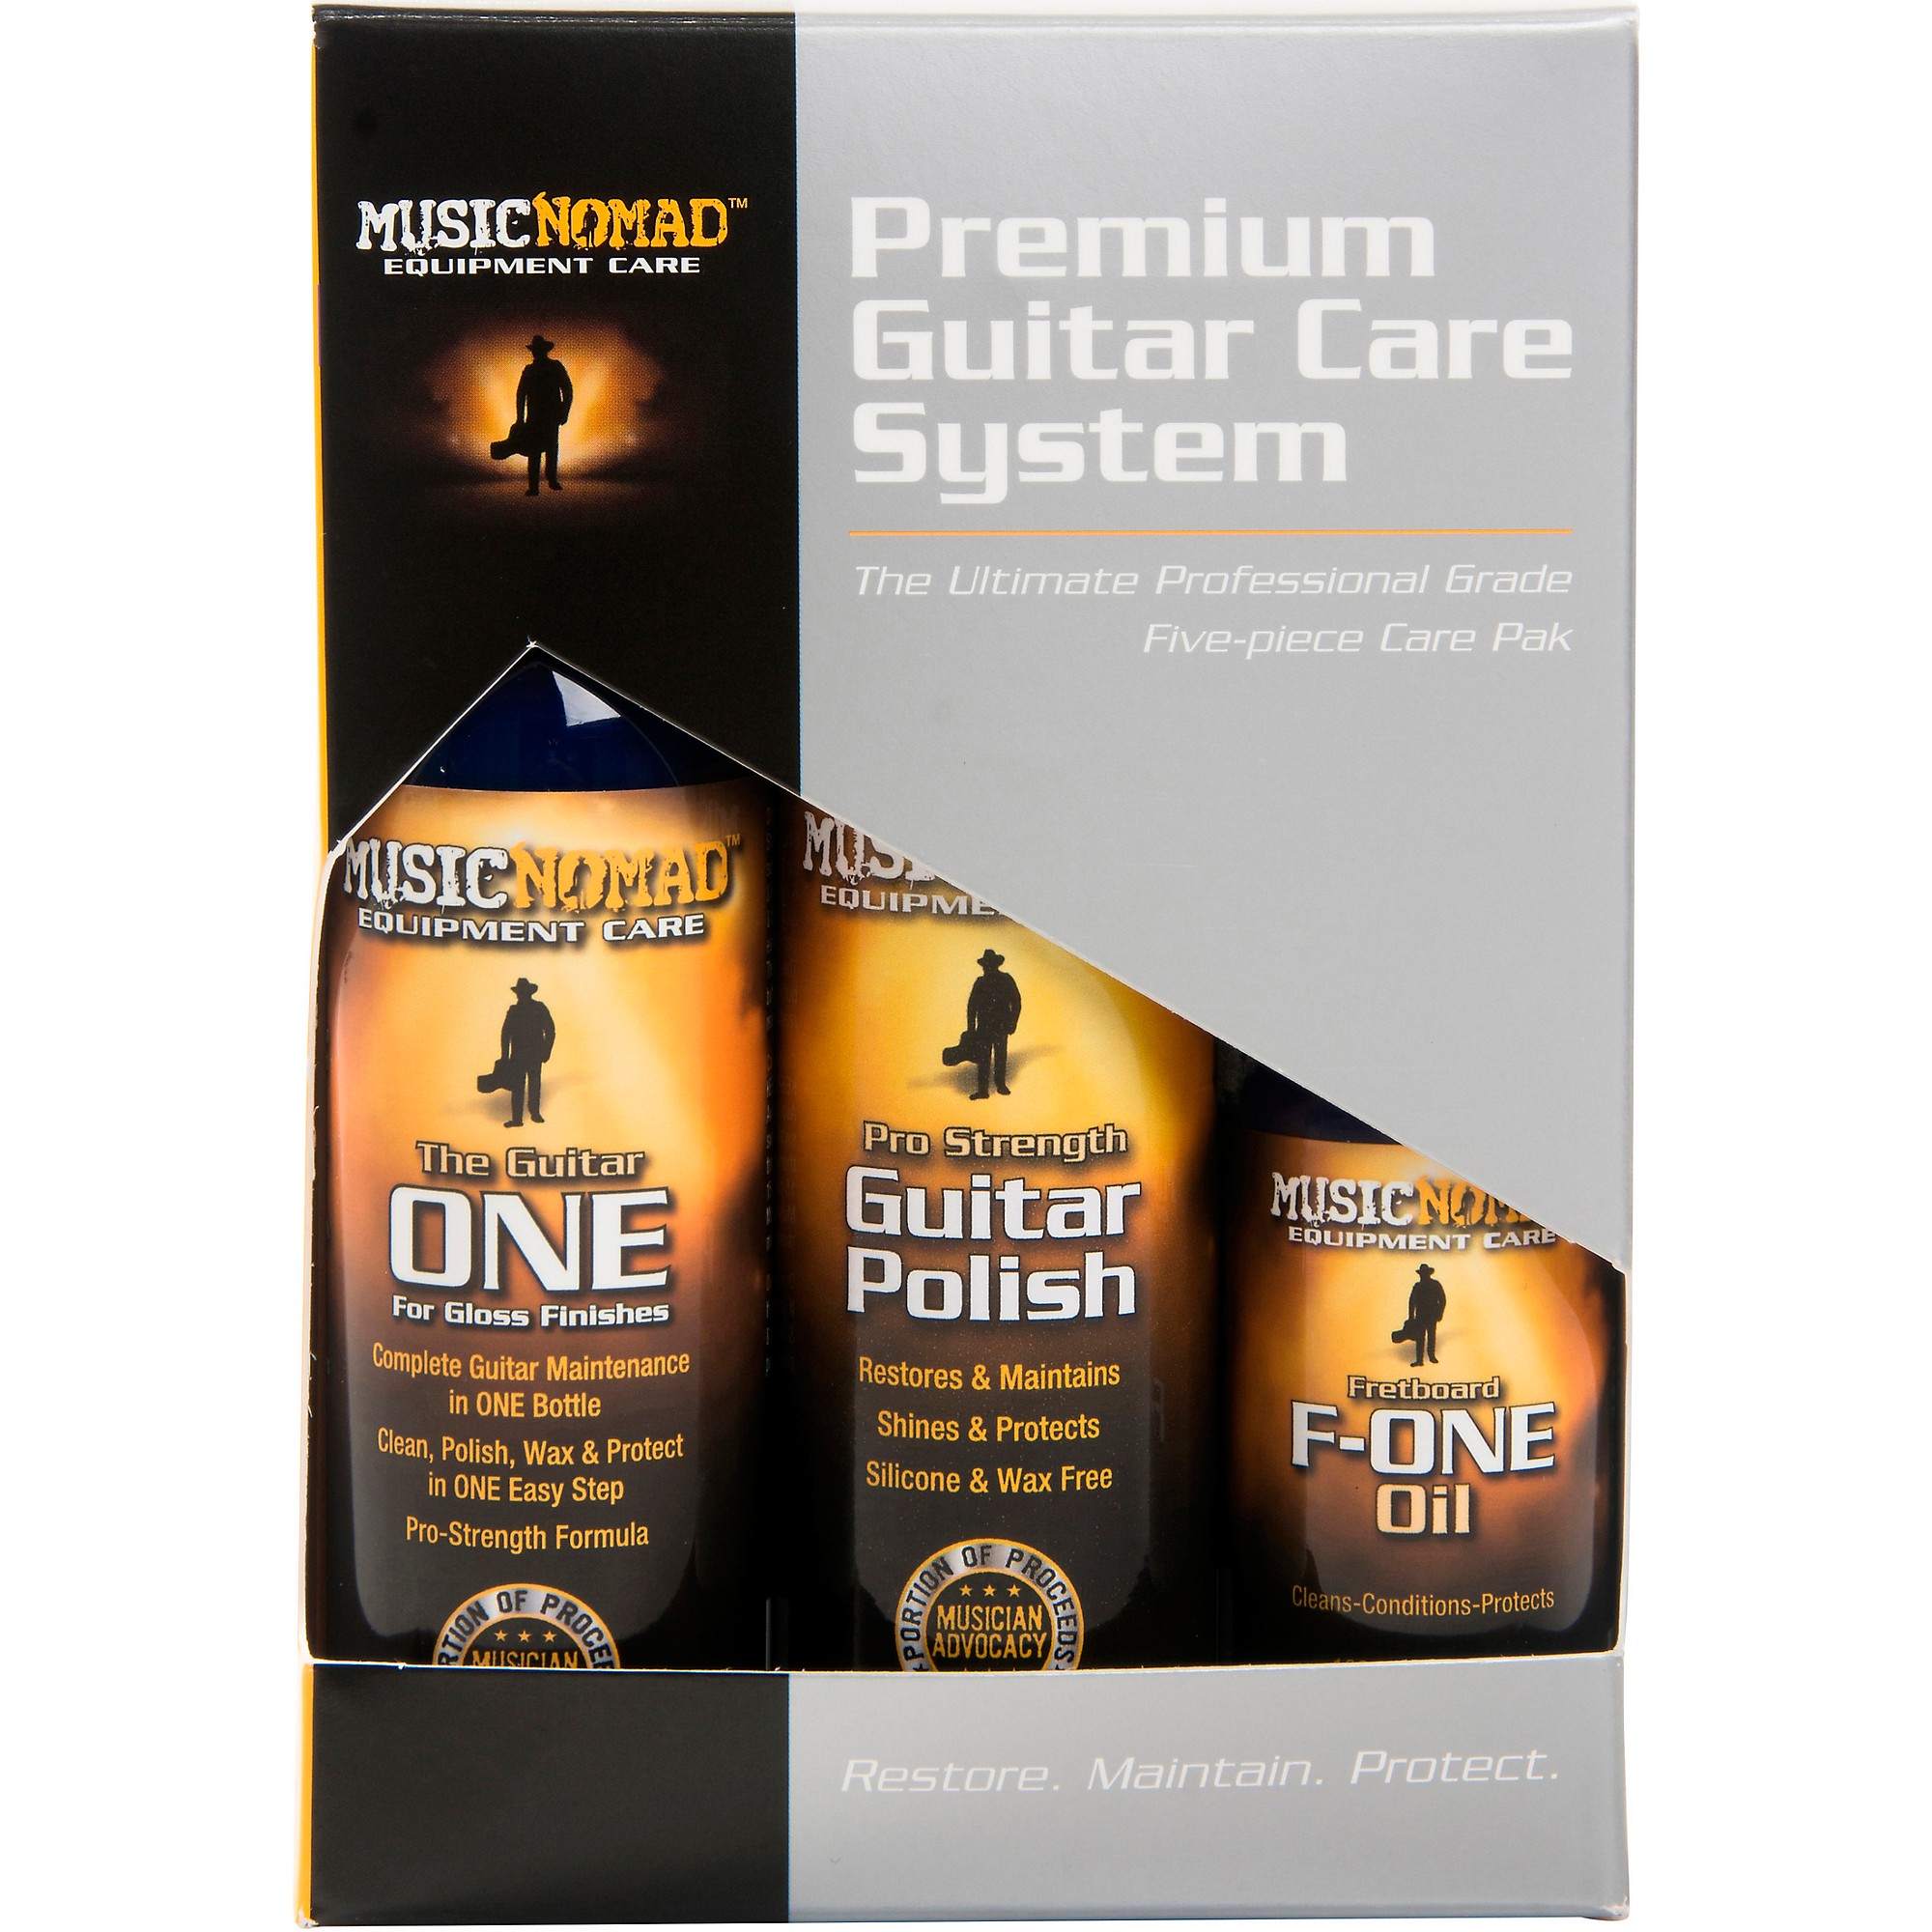 Guitar Fretboard Oil Fretboard Cleaner Oil Kit Anti-drying Guitar Fretboard  Care Cleaning Polishing Accessories For